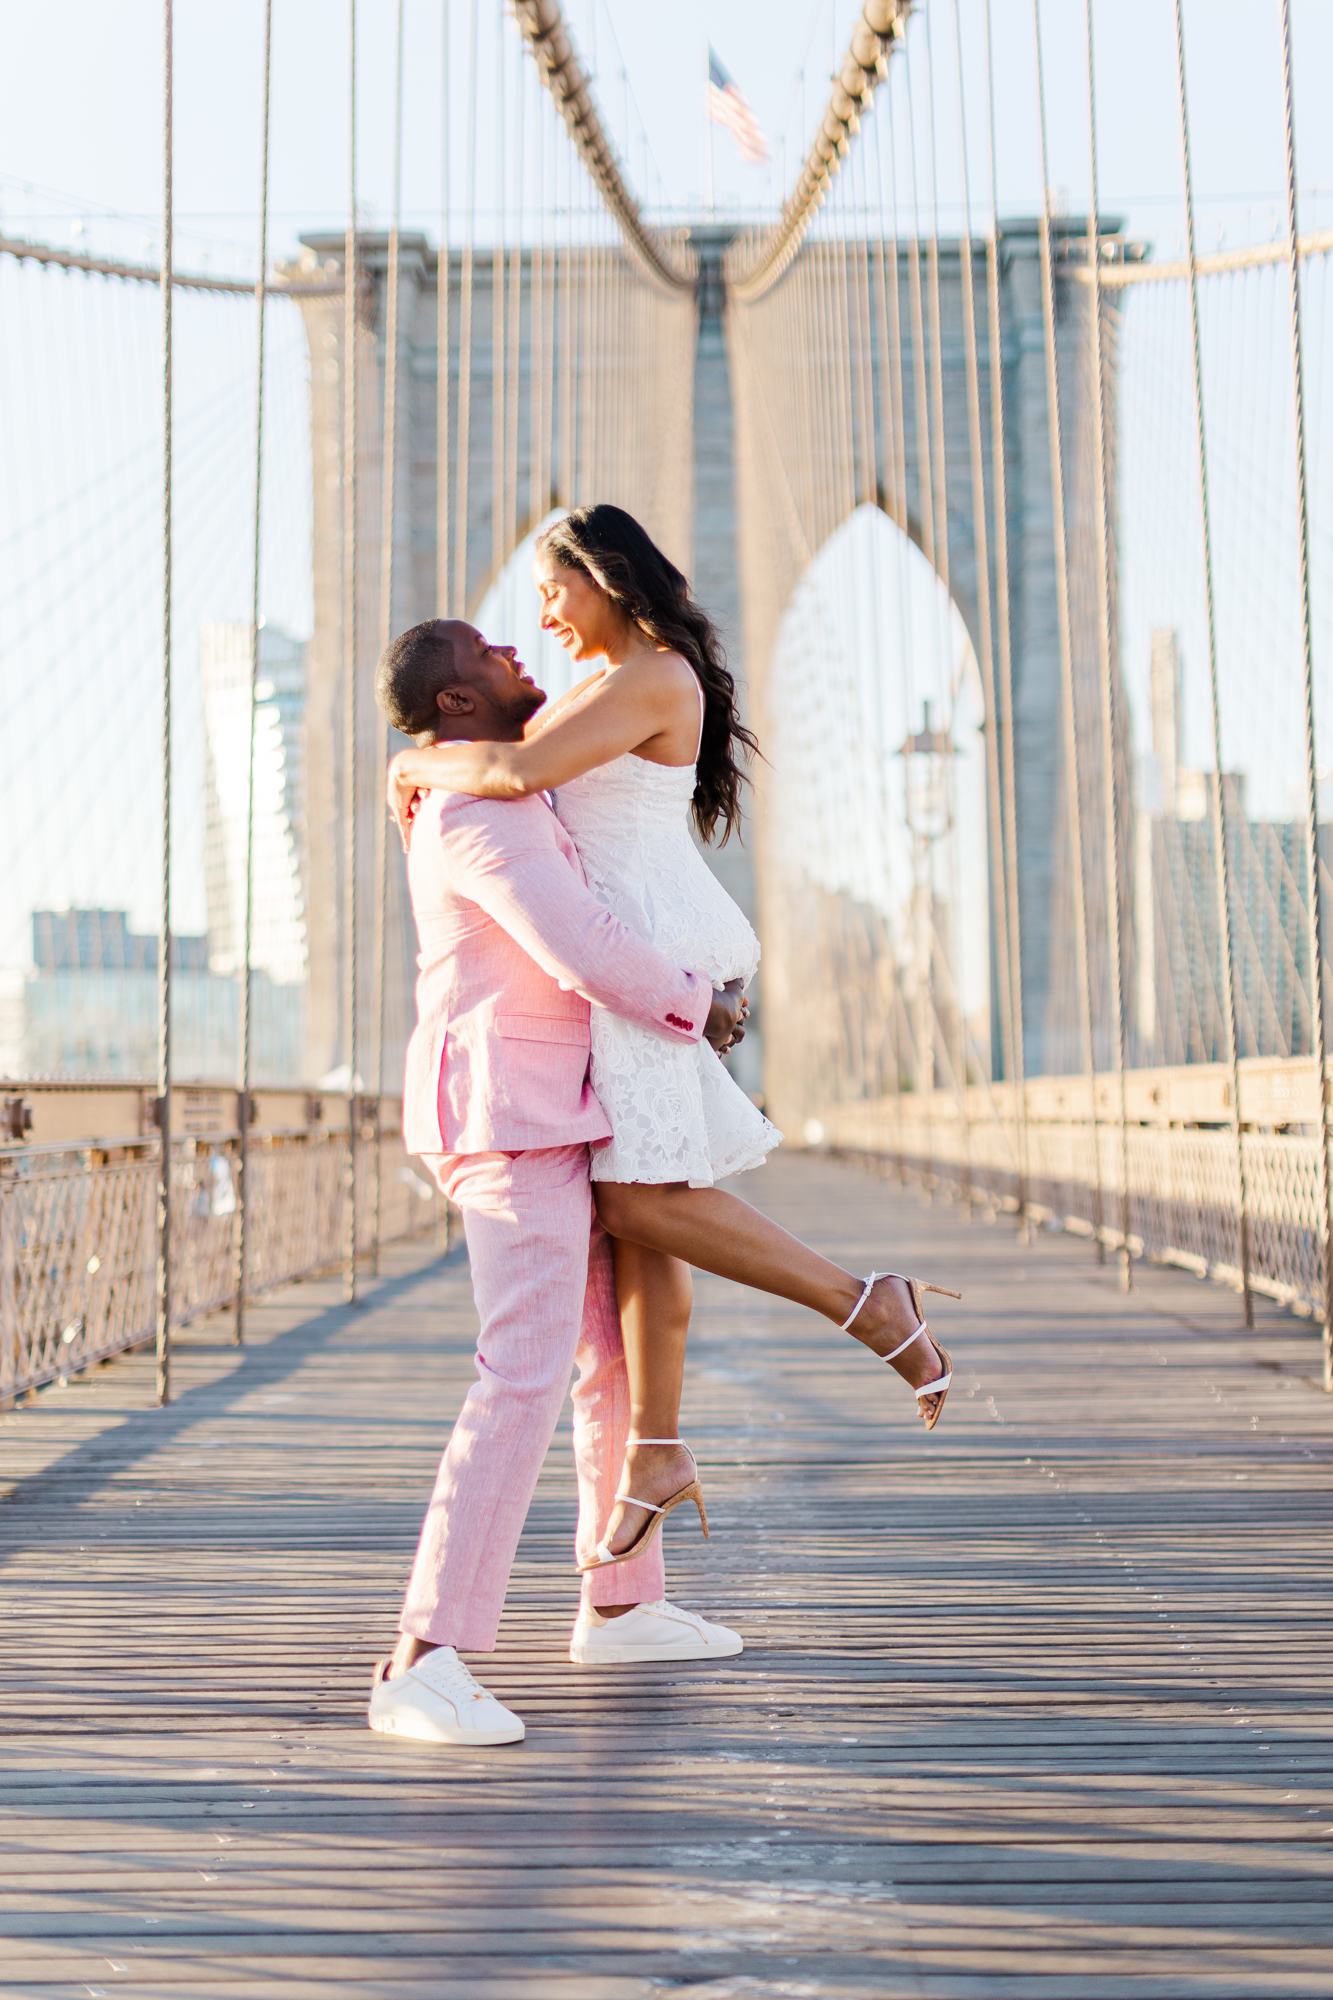 Jaw - Dropping Engagement Photos at Sunrise, New York